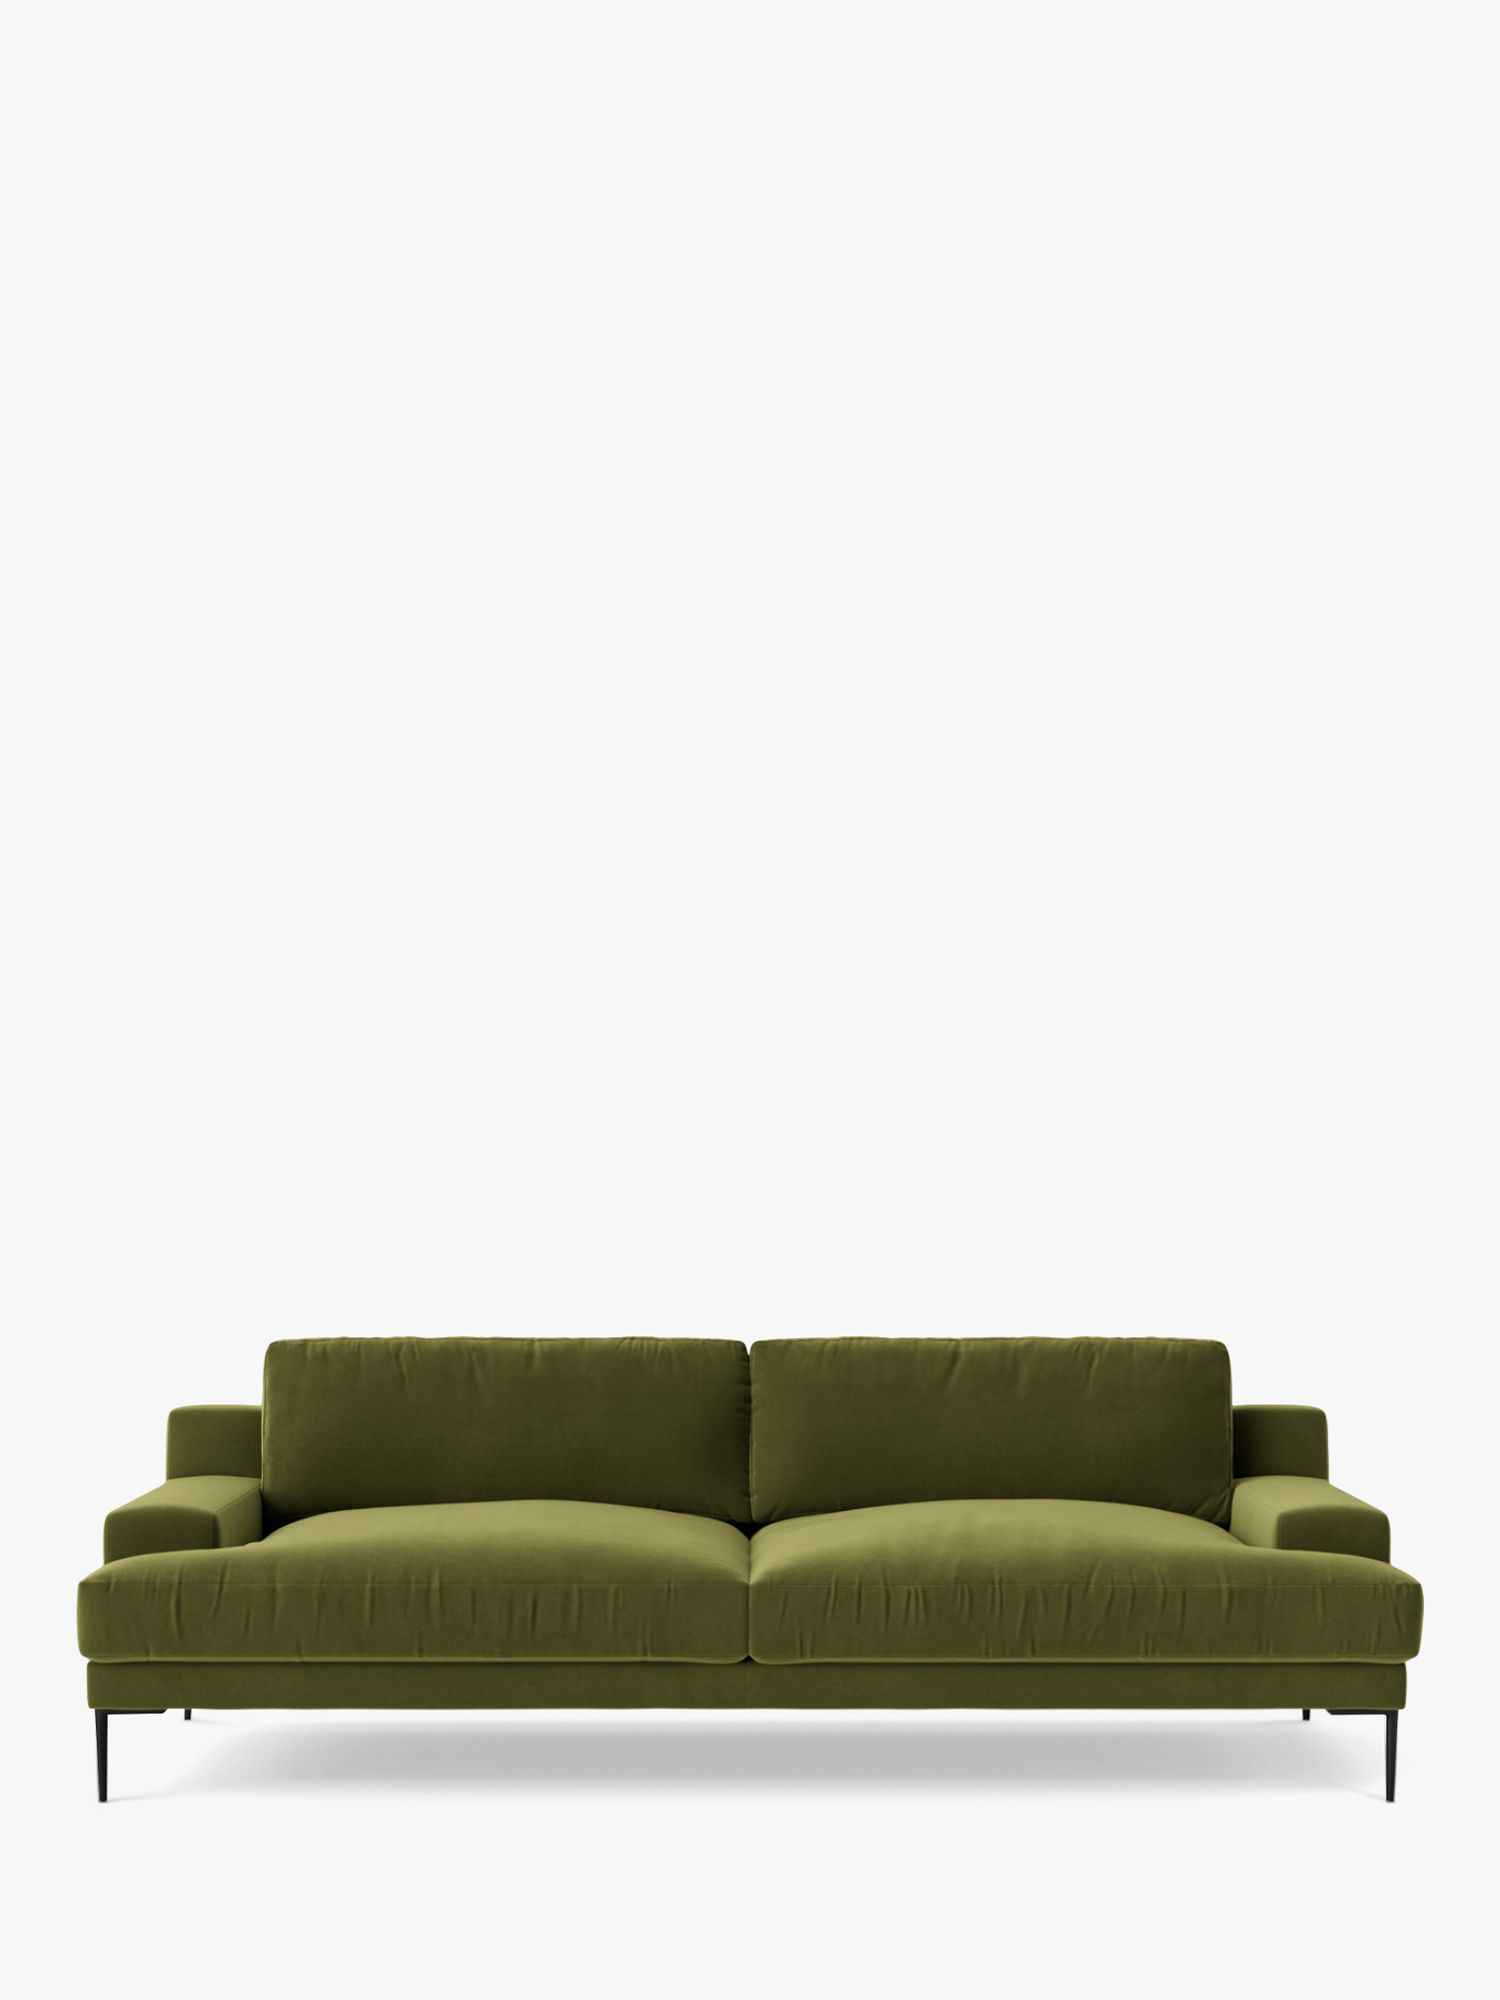 Almera Range, Swoon Almera Large 3 Seater Sofa, Metal Leg, Easy Velvet Fern